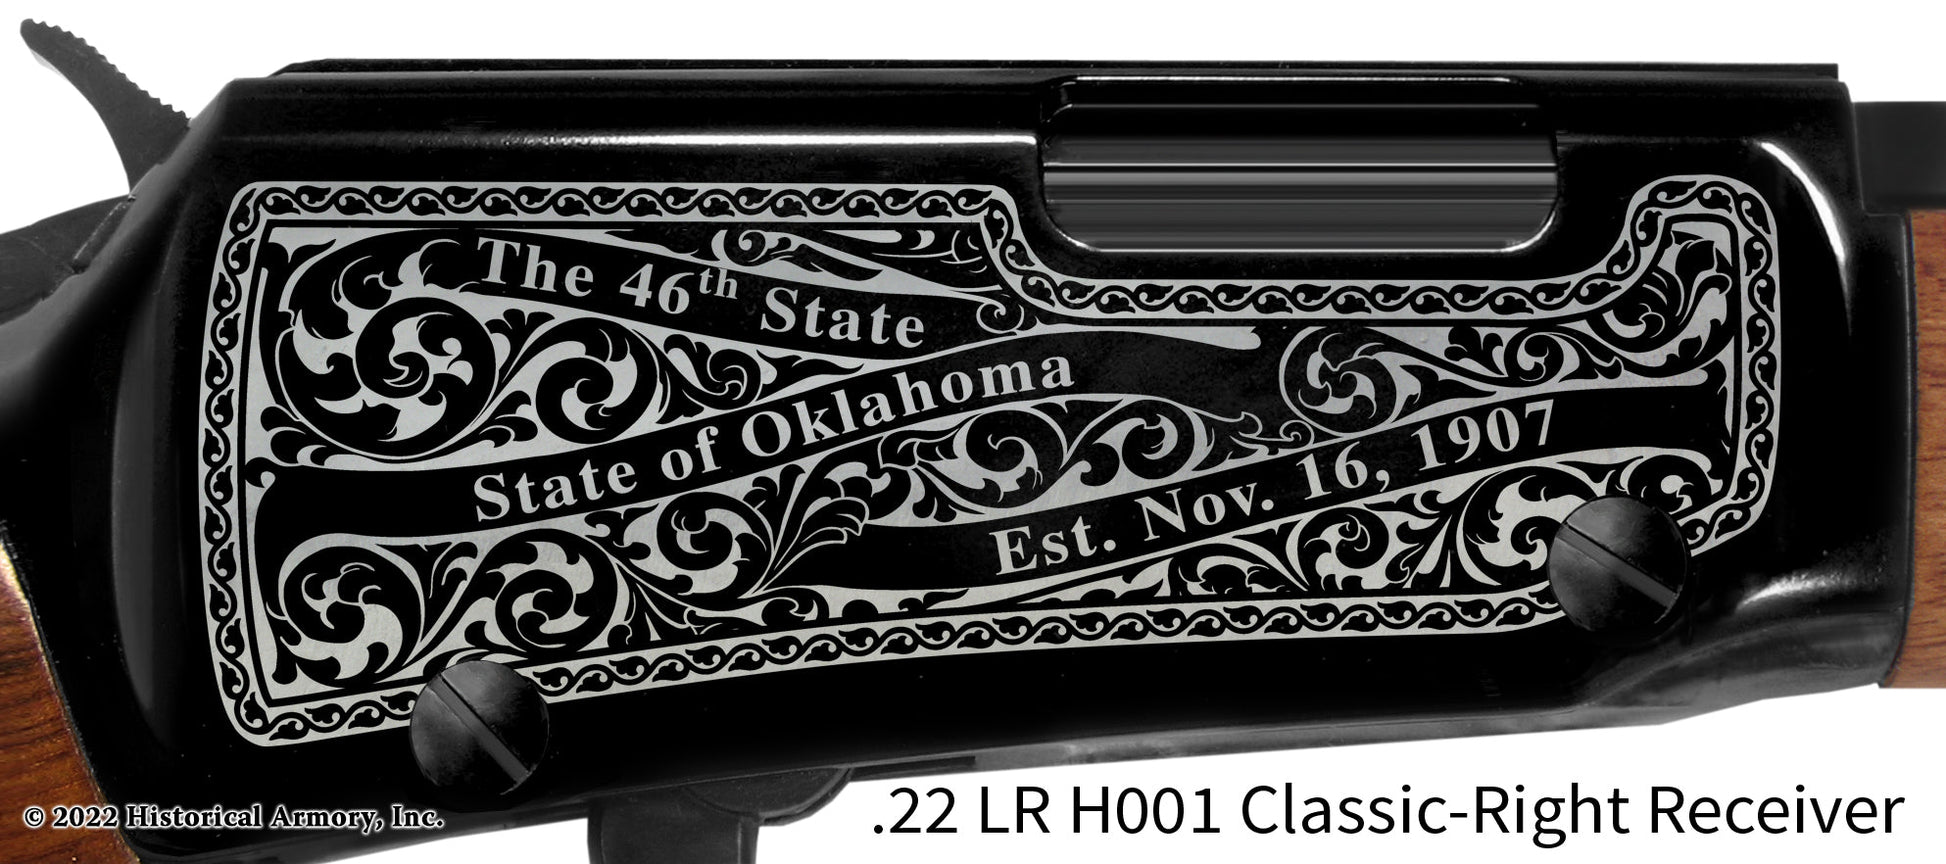 McClain County Oklahoma Engraved Henry H001 Rifle